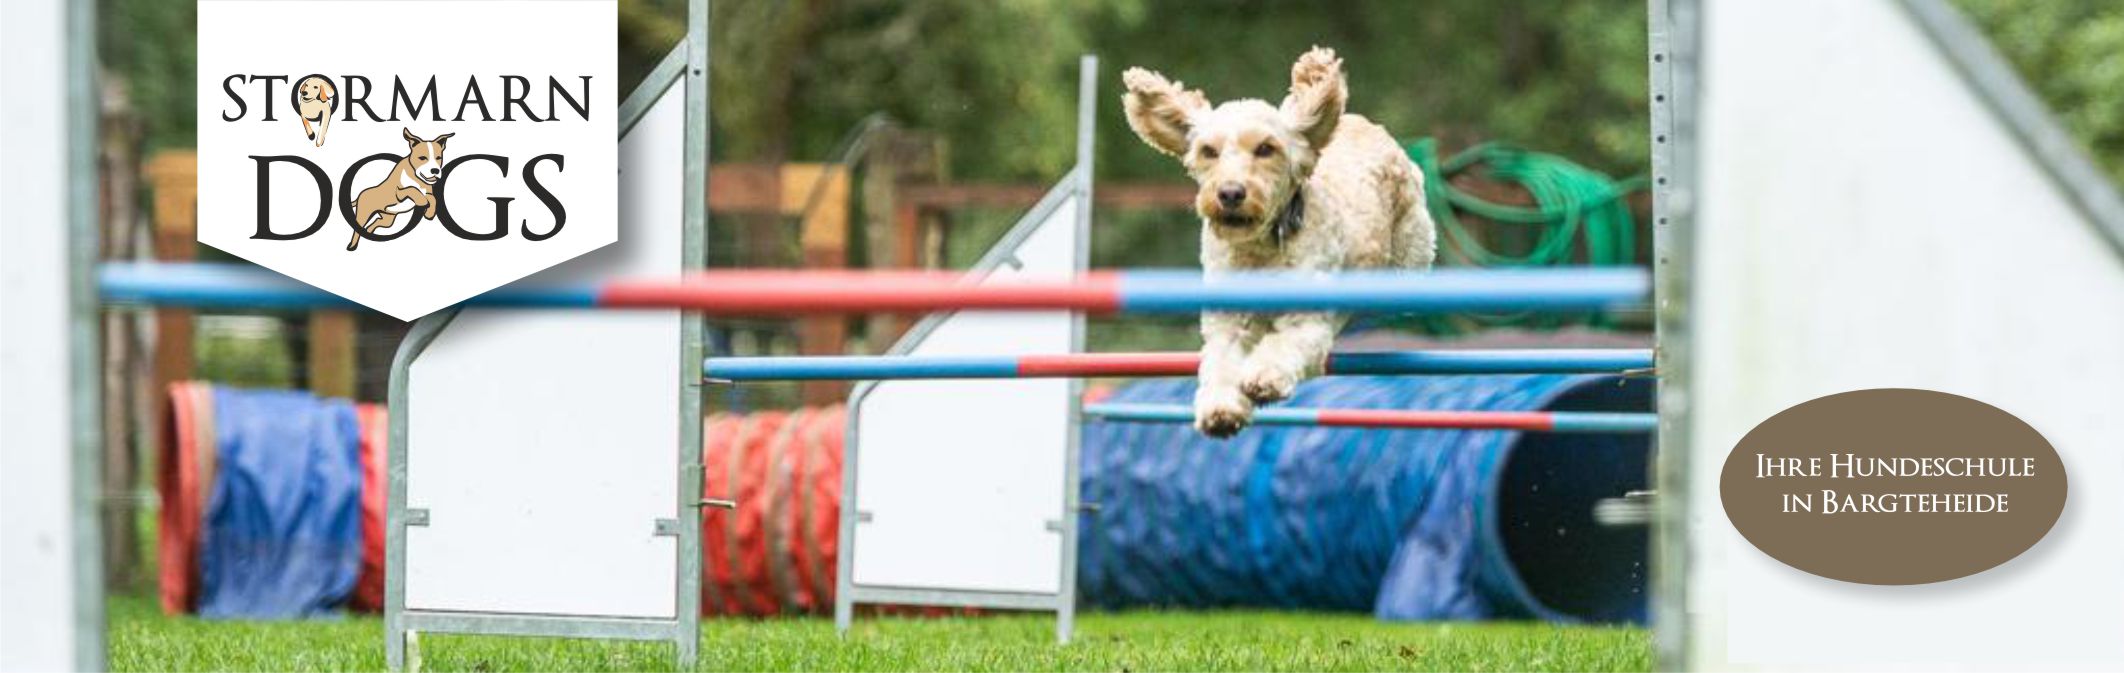 Hundeschule Stormarn Dogs - Agility - Pudel mit beigem Fell springt über Hürden